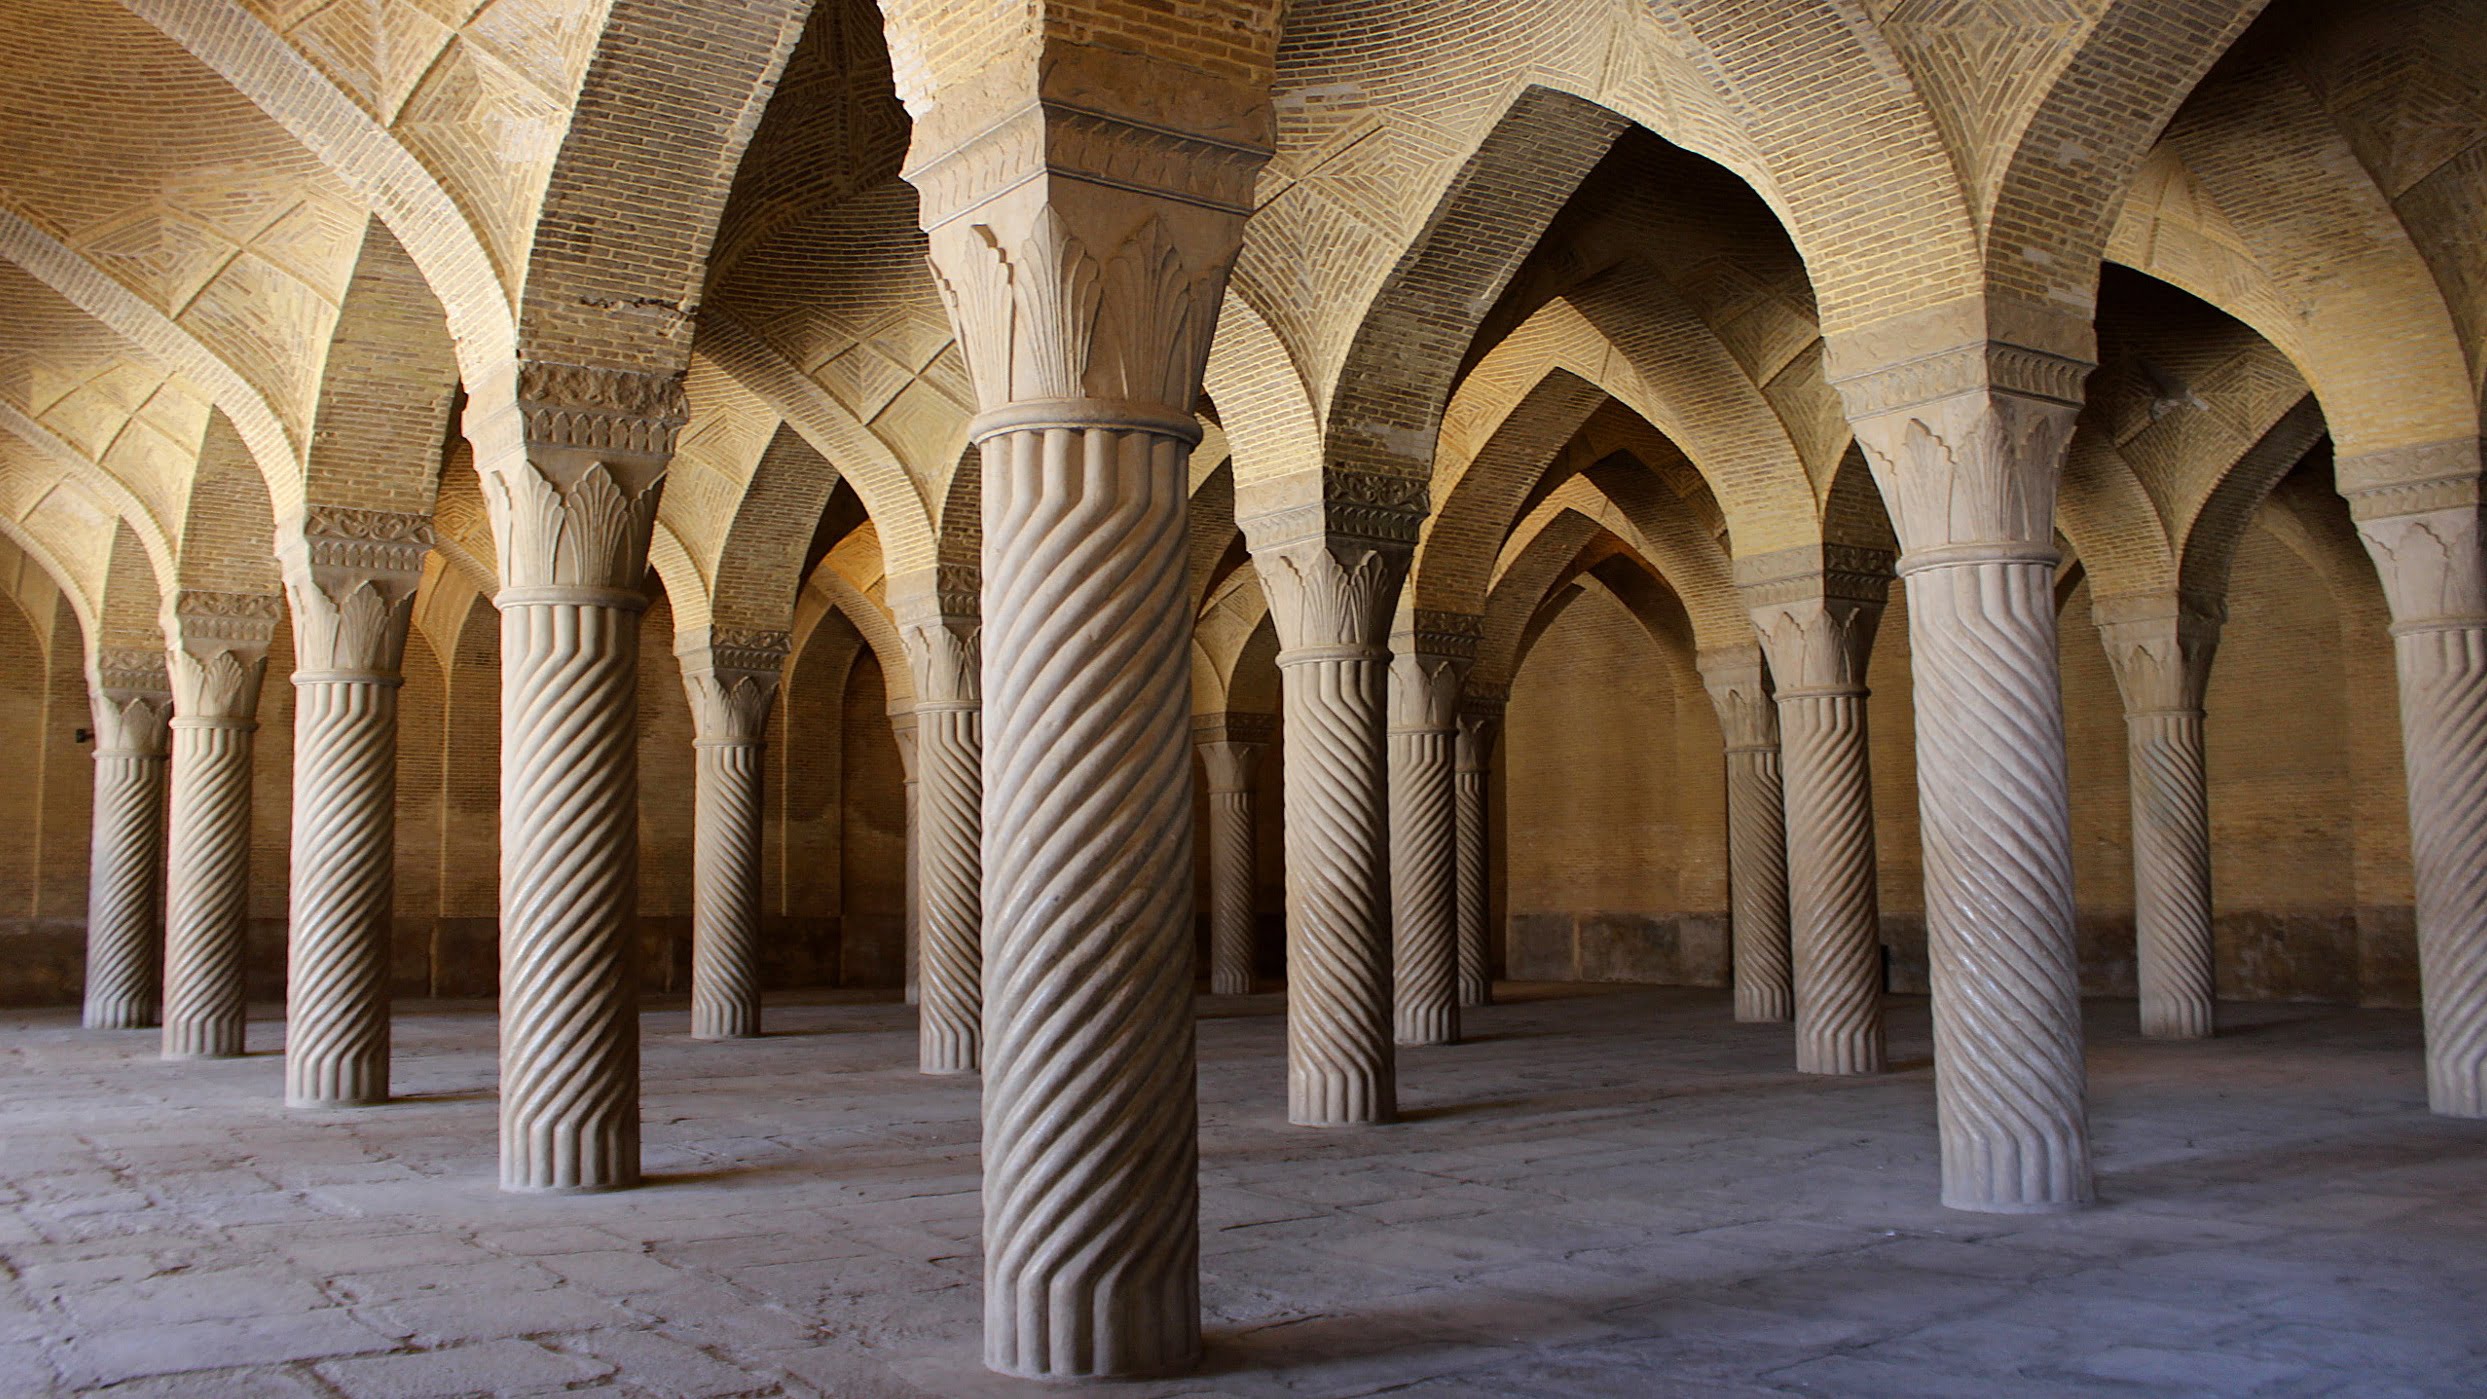 Pillars inside the Vakil Mosque in Shiraz.